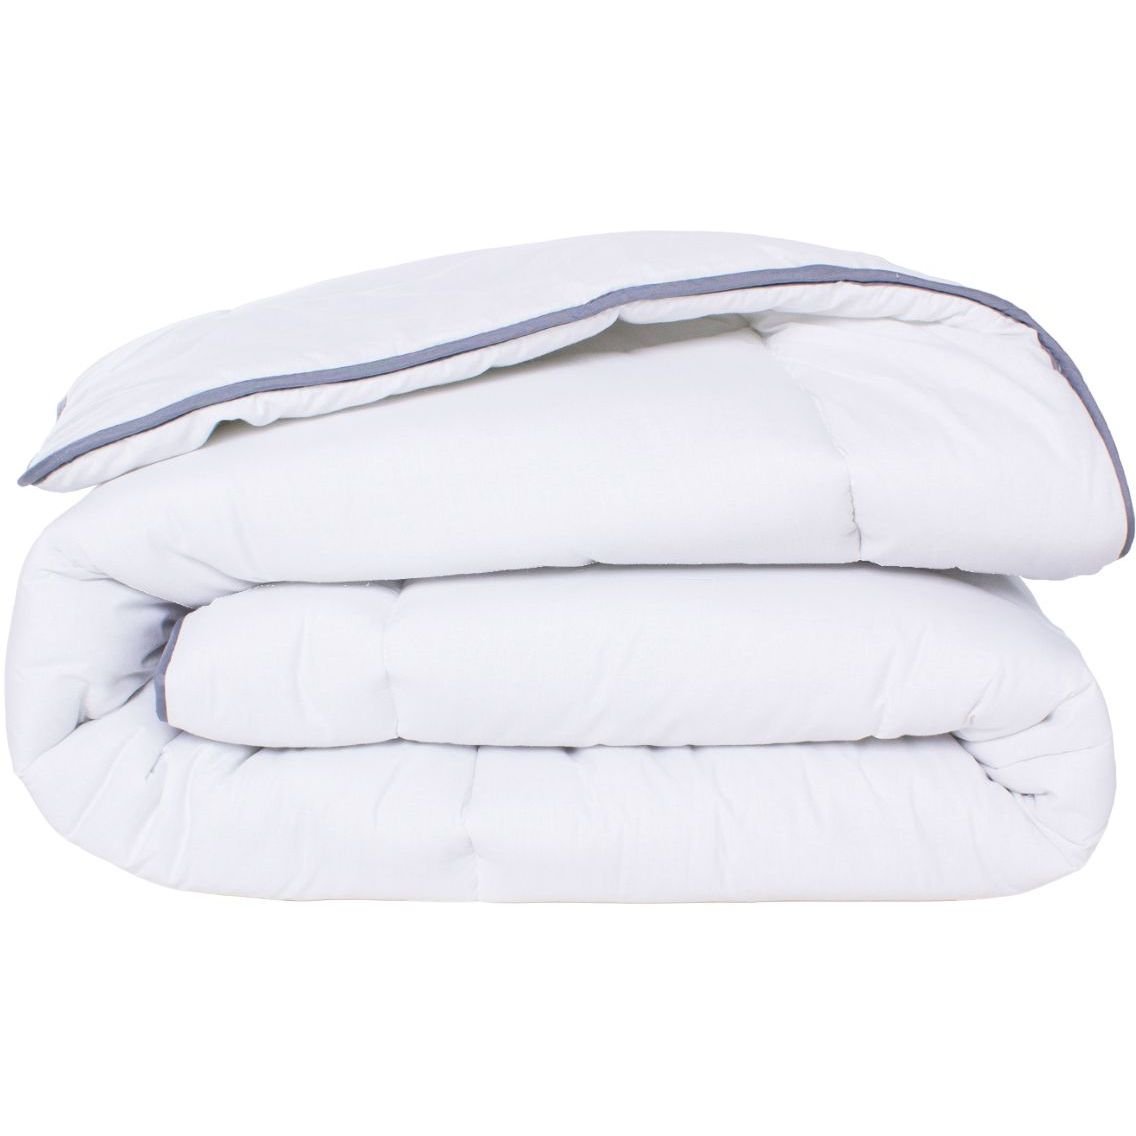 Одеяло шерстяное MirSon Royal №026, демисезонное, 110x140 см, белое - фото 1